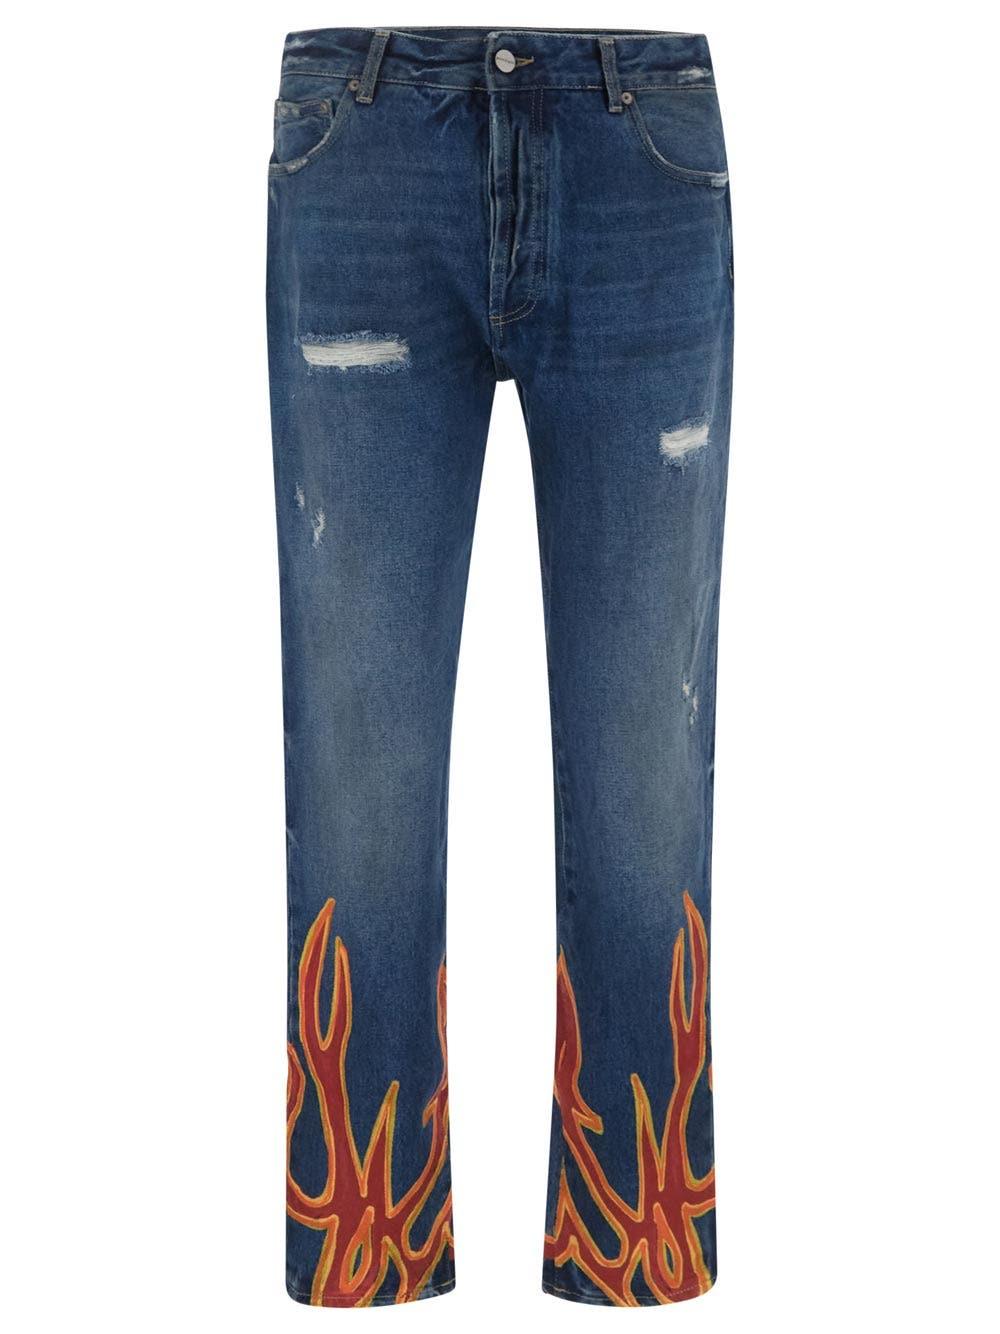 Palm Angels Burning Regular Jeans